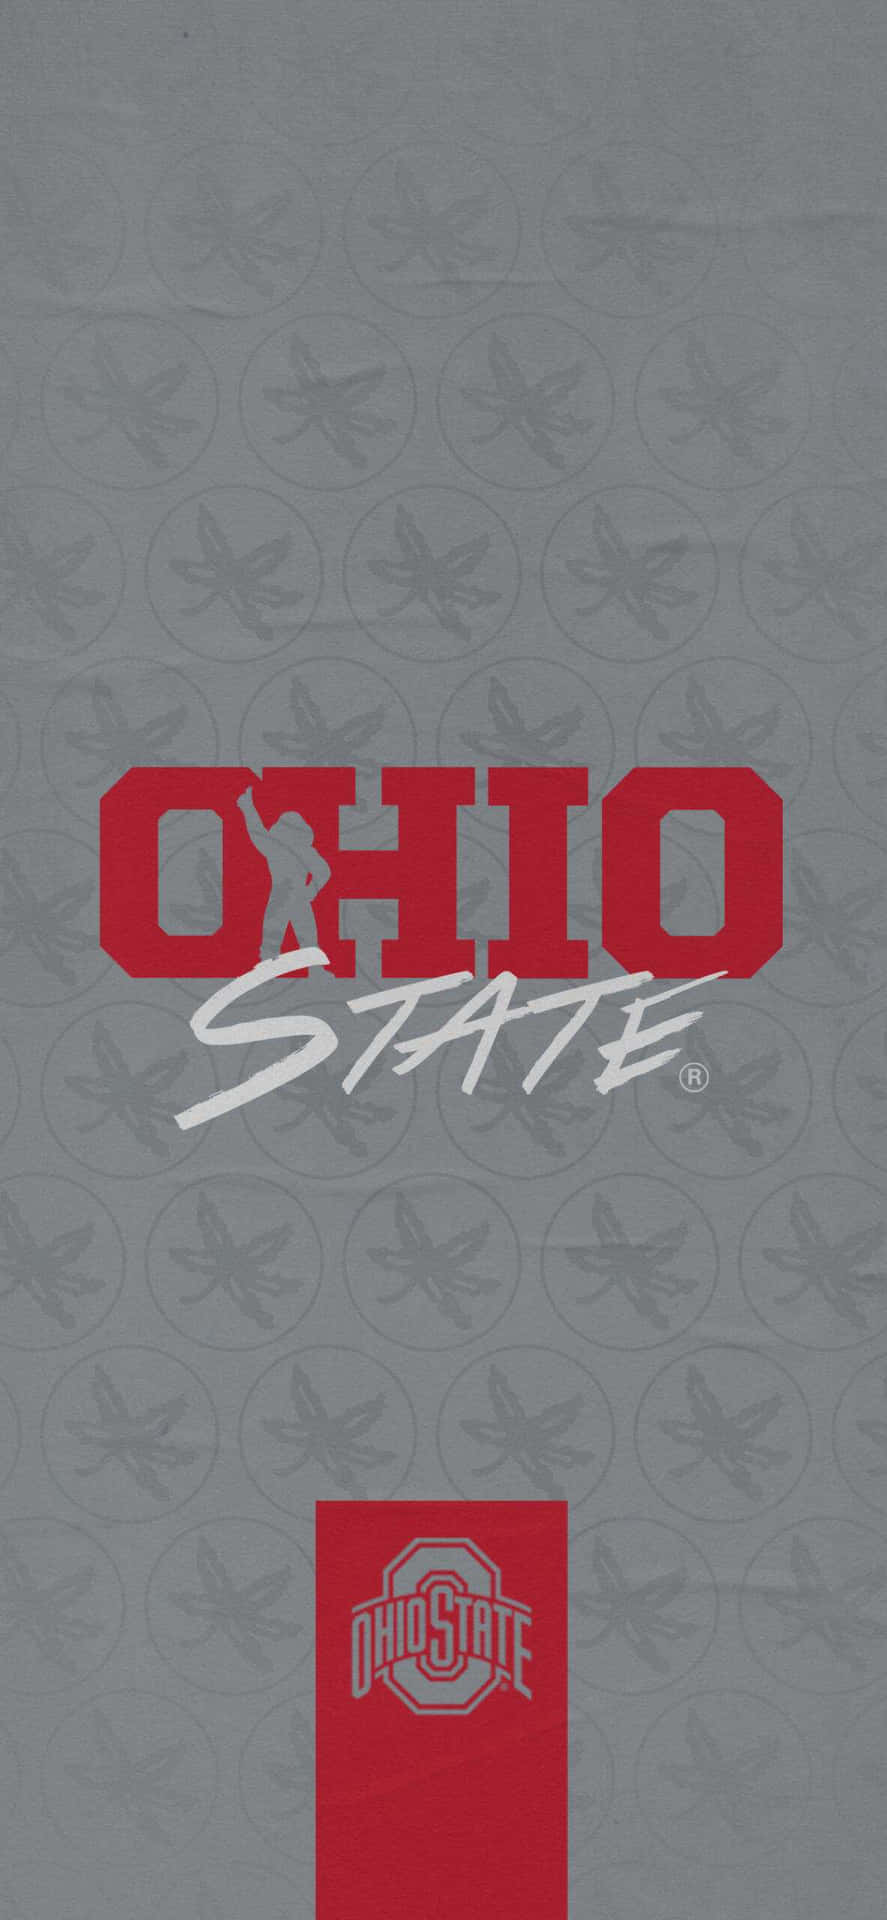 Vis dit ånd—Ohio State Football på iPhone. Wallpaper